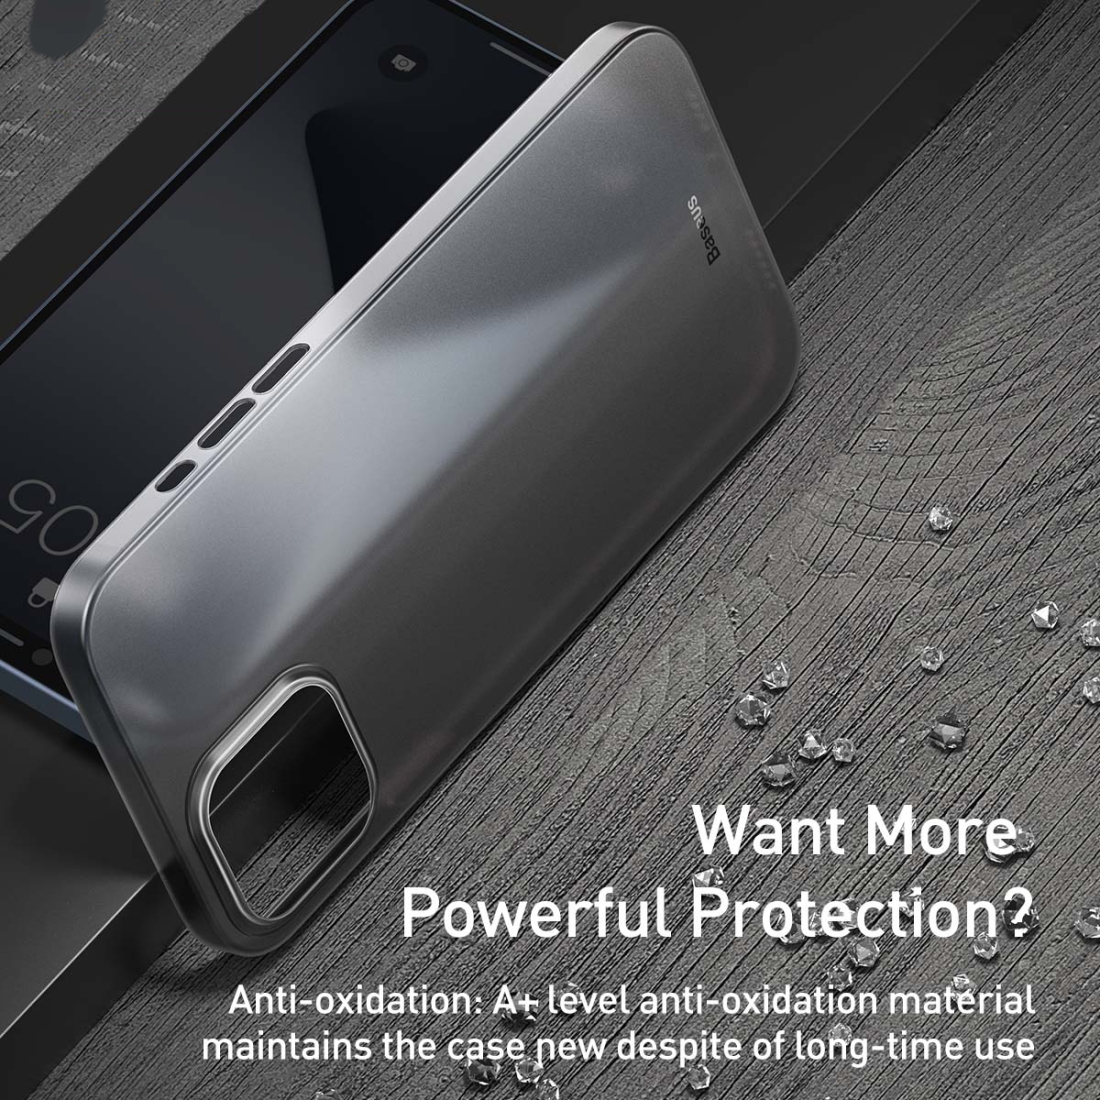 Husa Apple iPhone 12 Pro Max, Baseus Wing Case, Verde, 6.7 inch